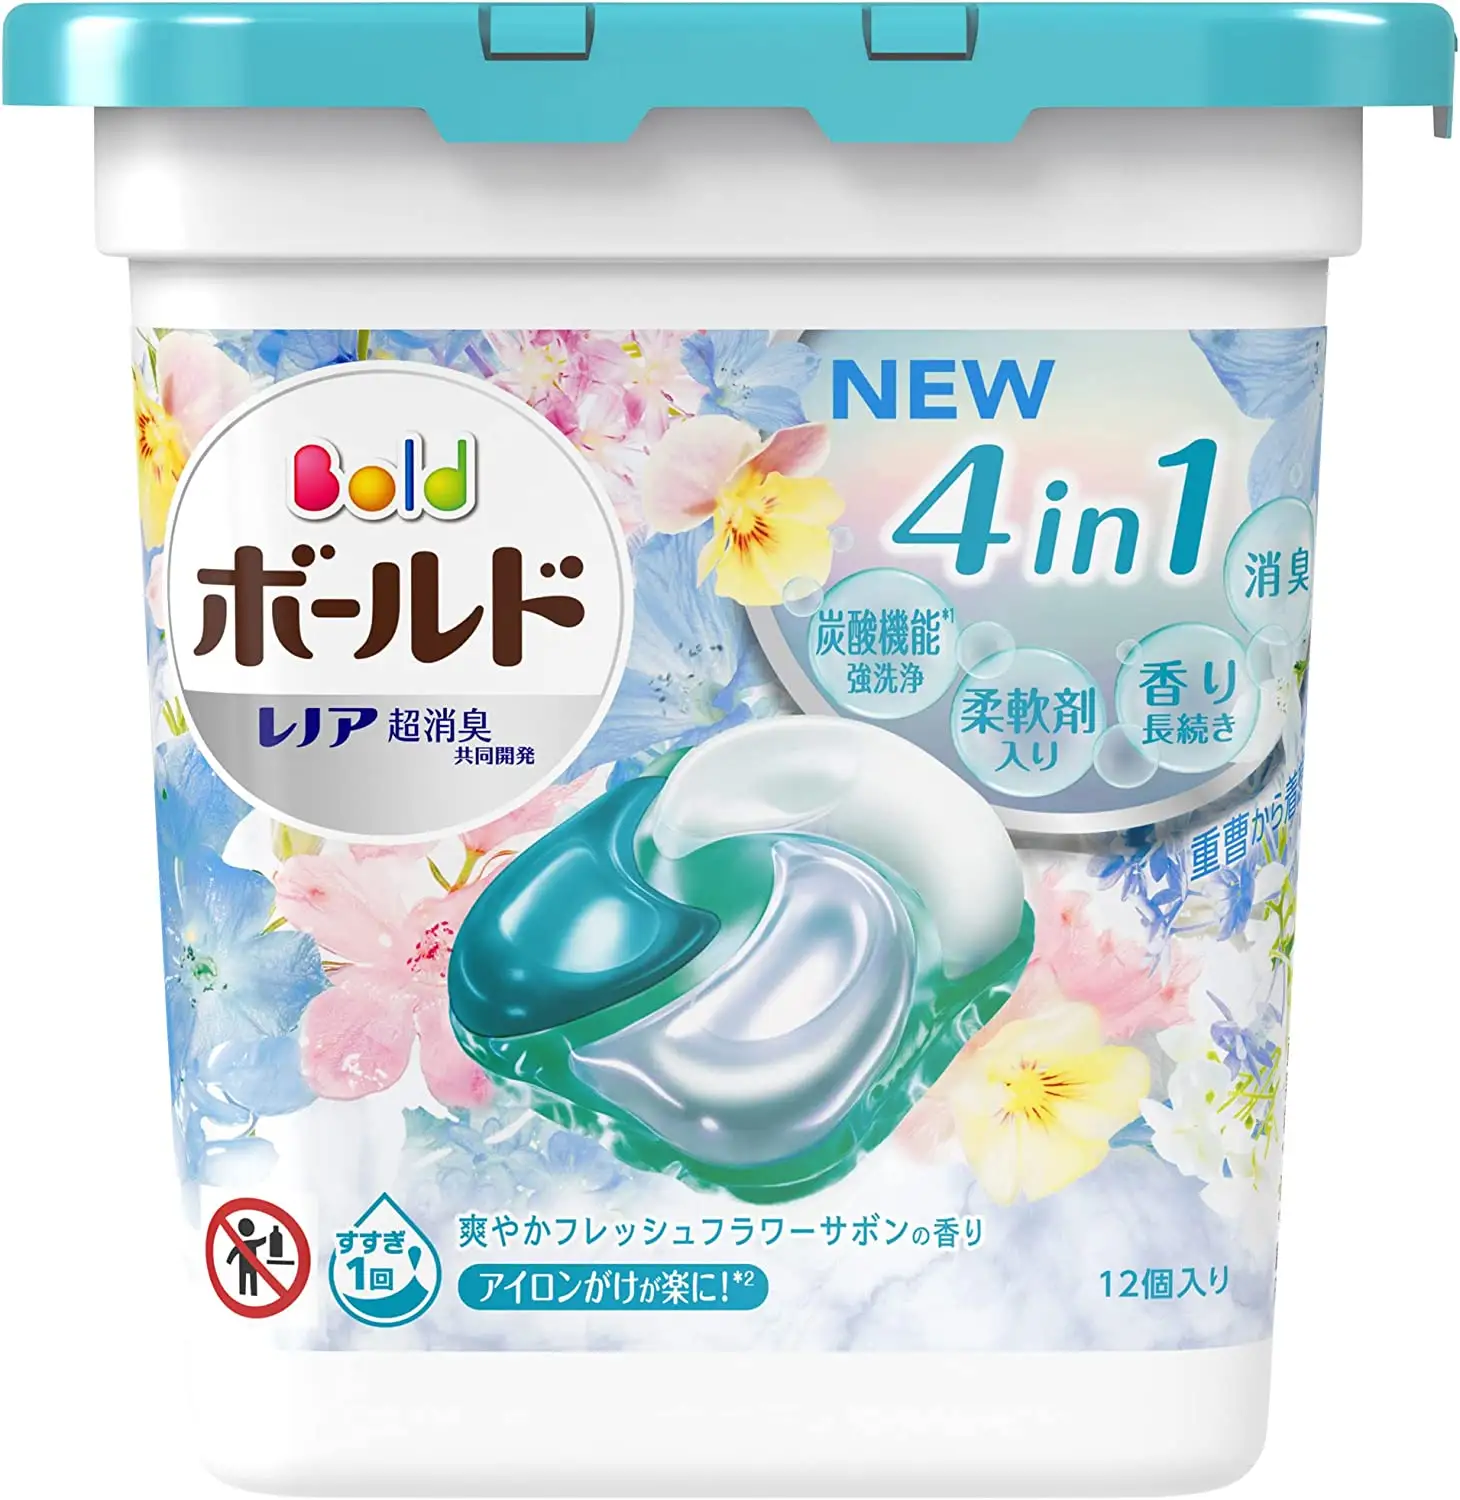 4 In 1 Bold Gel Bola Wangi Laundry Detergen Pods Detox Menyegarkan Premium Bersih Asli Wadah 12 Pieces Buatan Jepang